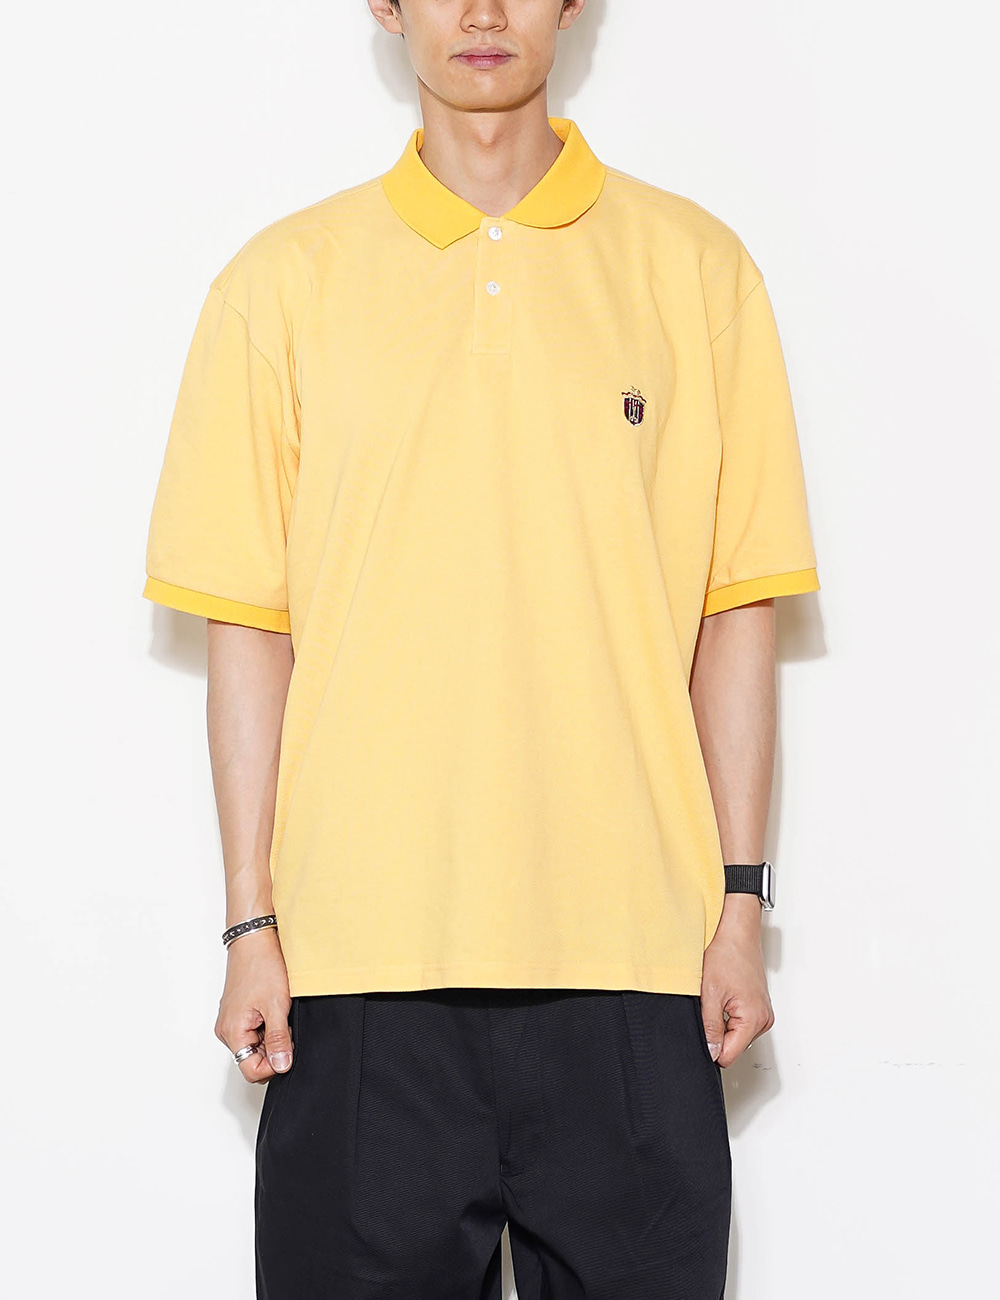 CRST Polo Shirts (Yellow)